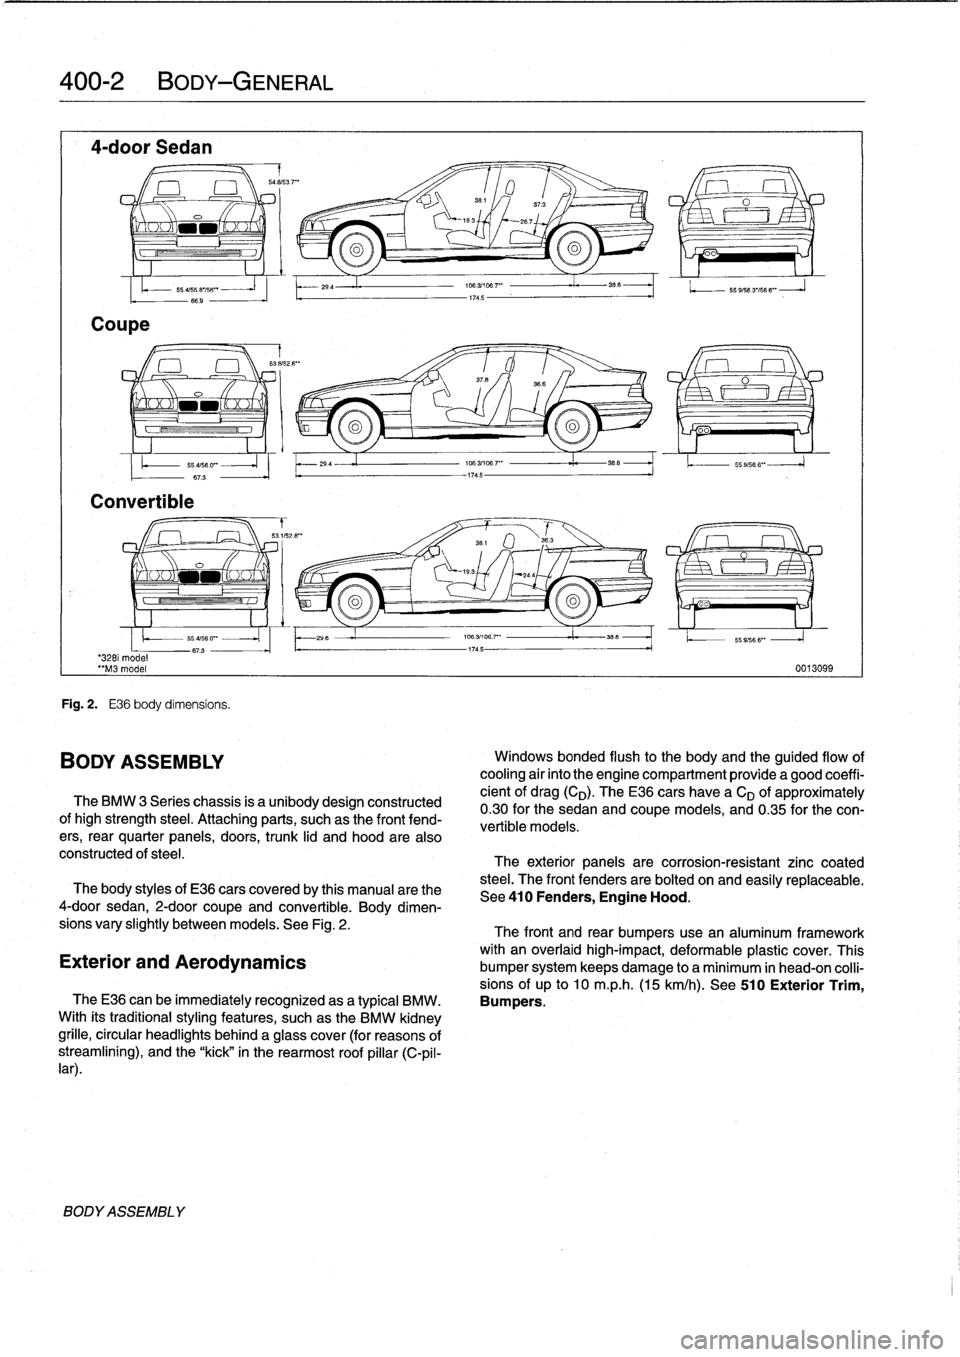 BMW 318i 1995 E36 Workshop Manual 
400-2
BODY-GENERAL

4-door
Sedan

Coupe

-
saas3
.7""

351
/

	

37
.3
O

	

I
x
`-193

	

267

o
oa

3281
model
"M3
model

Convertible

BODYASSEMBLY

55
ass
.e
iss
""
-
66
.9
-

Fig
.
2
.

	

E36
b